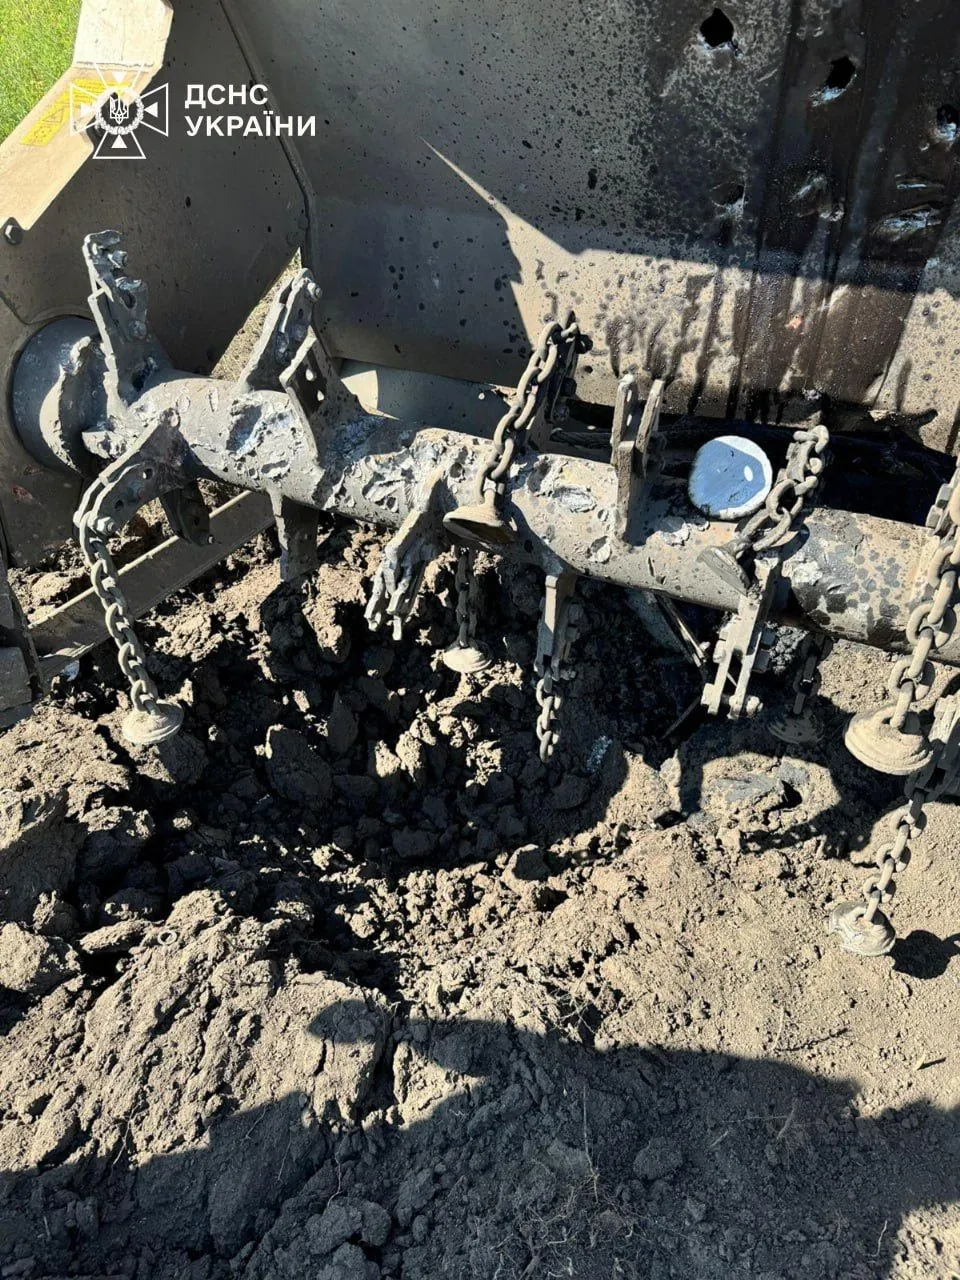 shell-explosion-damages-demining-vehicle-in-donetsk-region